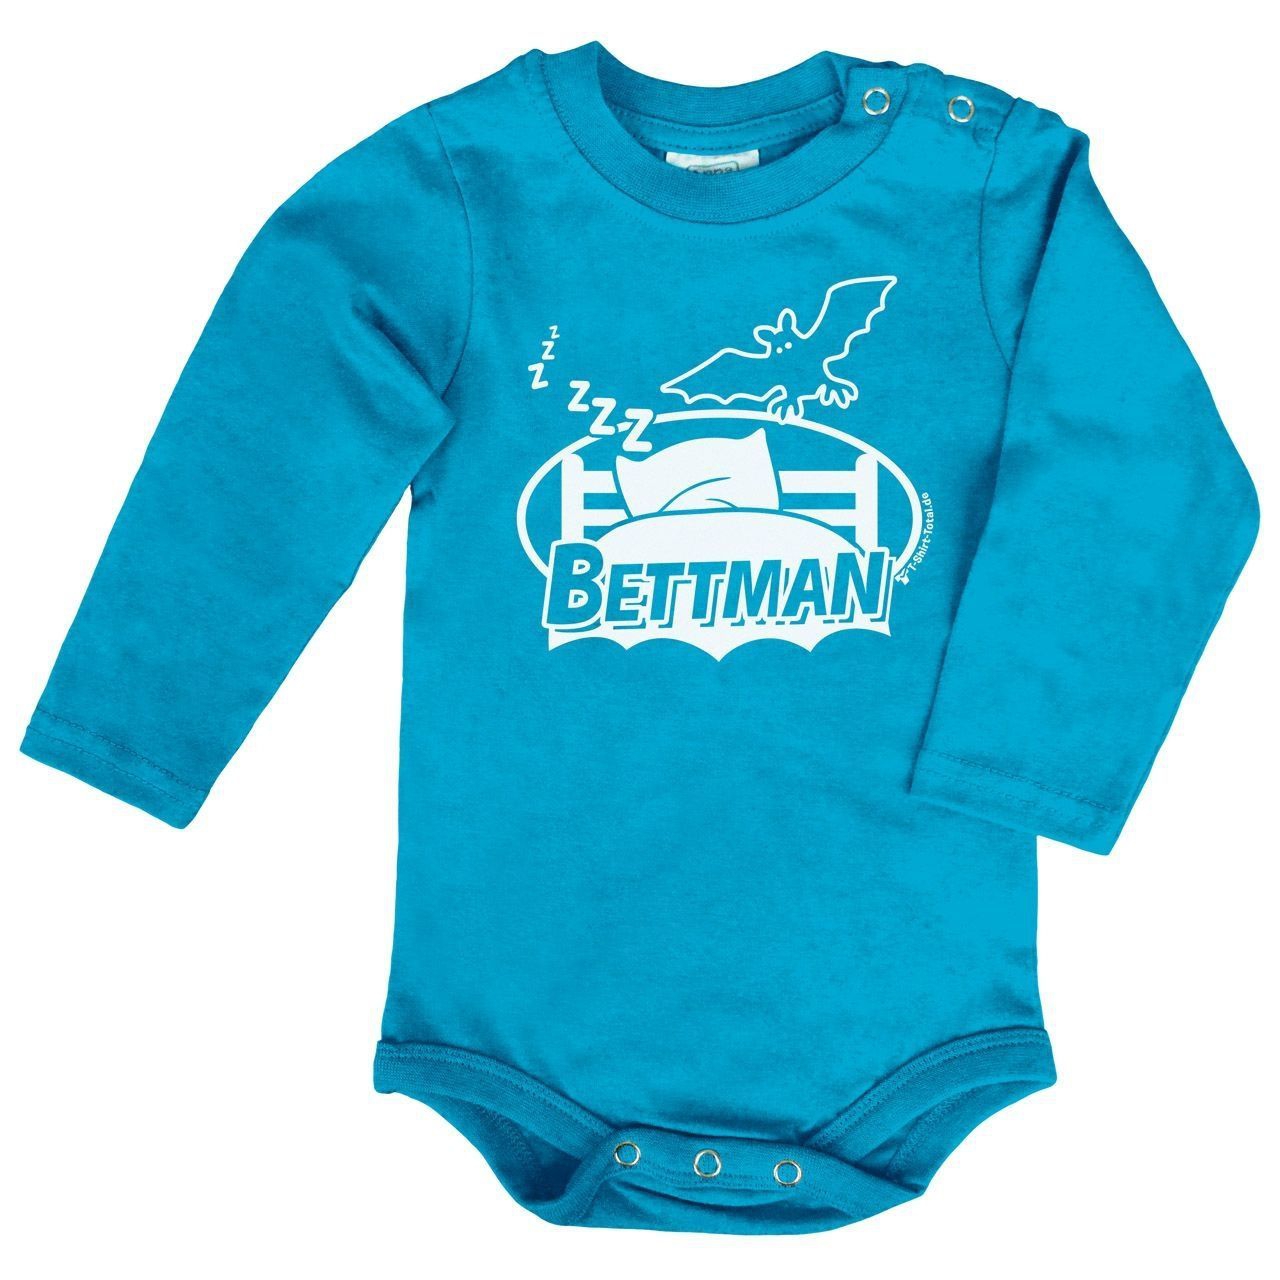 Bettman Baby Body Langarm türkis 68 / 74